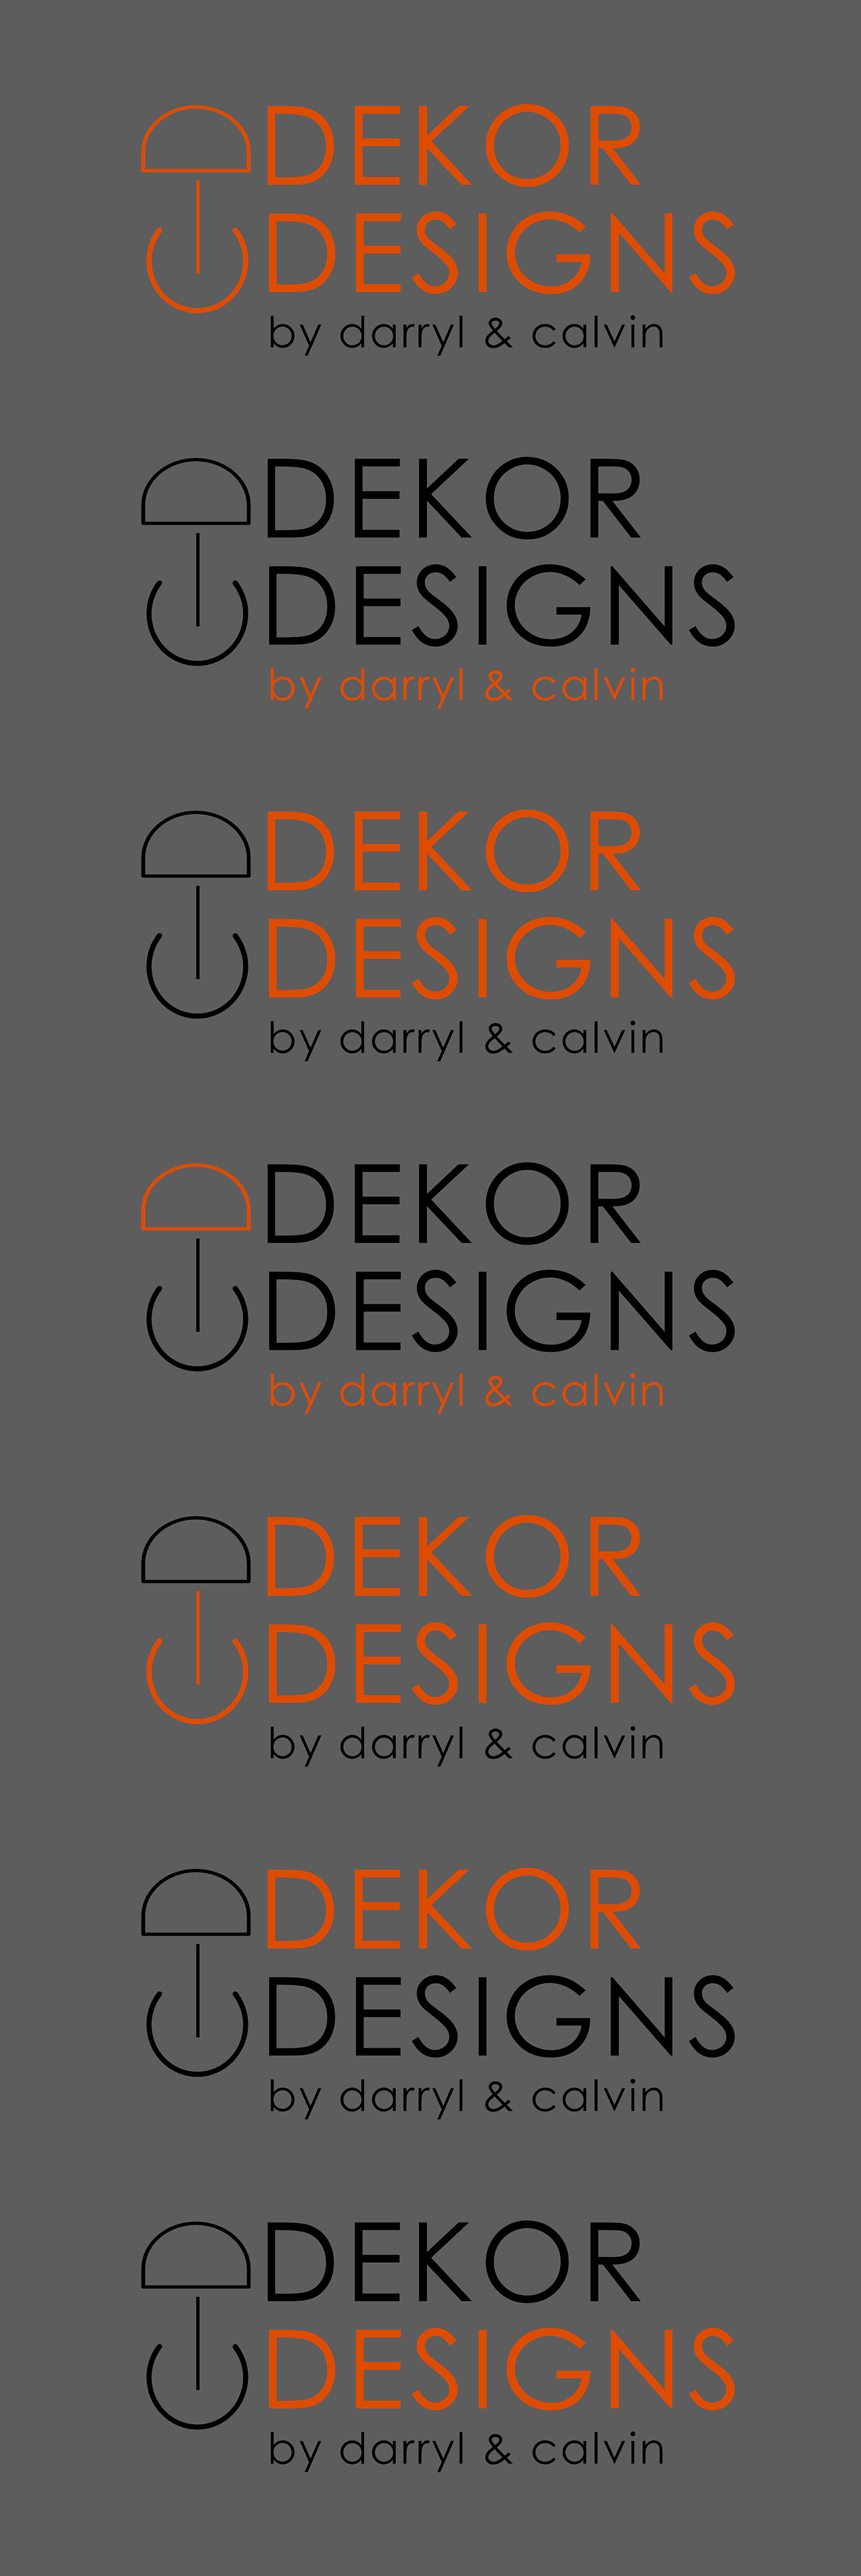 Logo Design typography   graphic design  commission